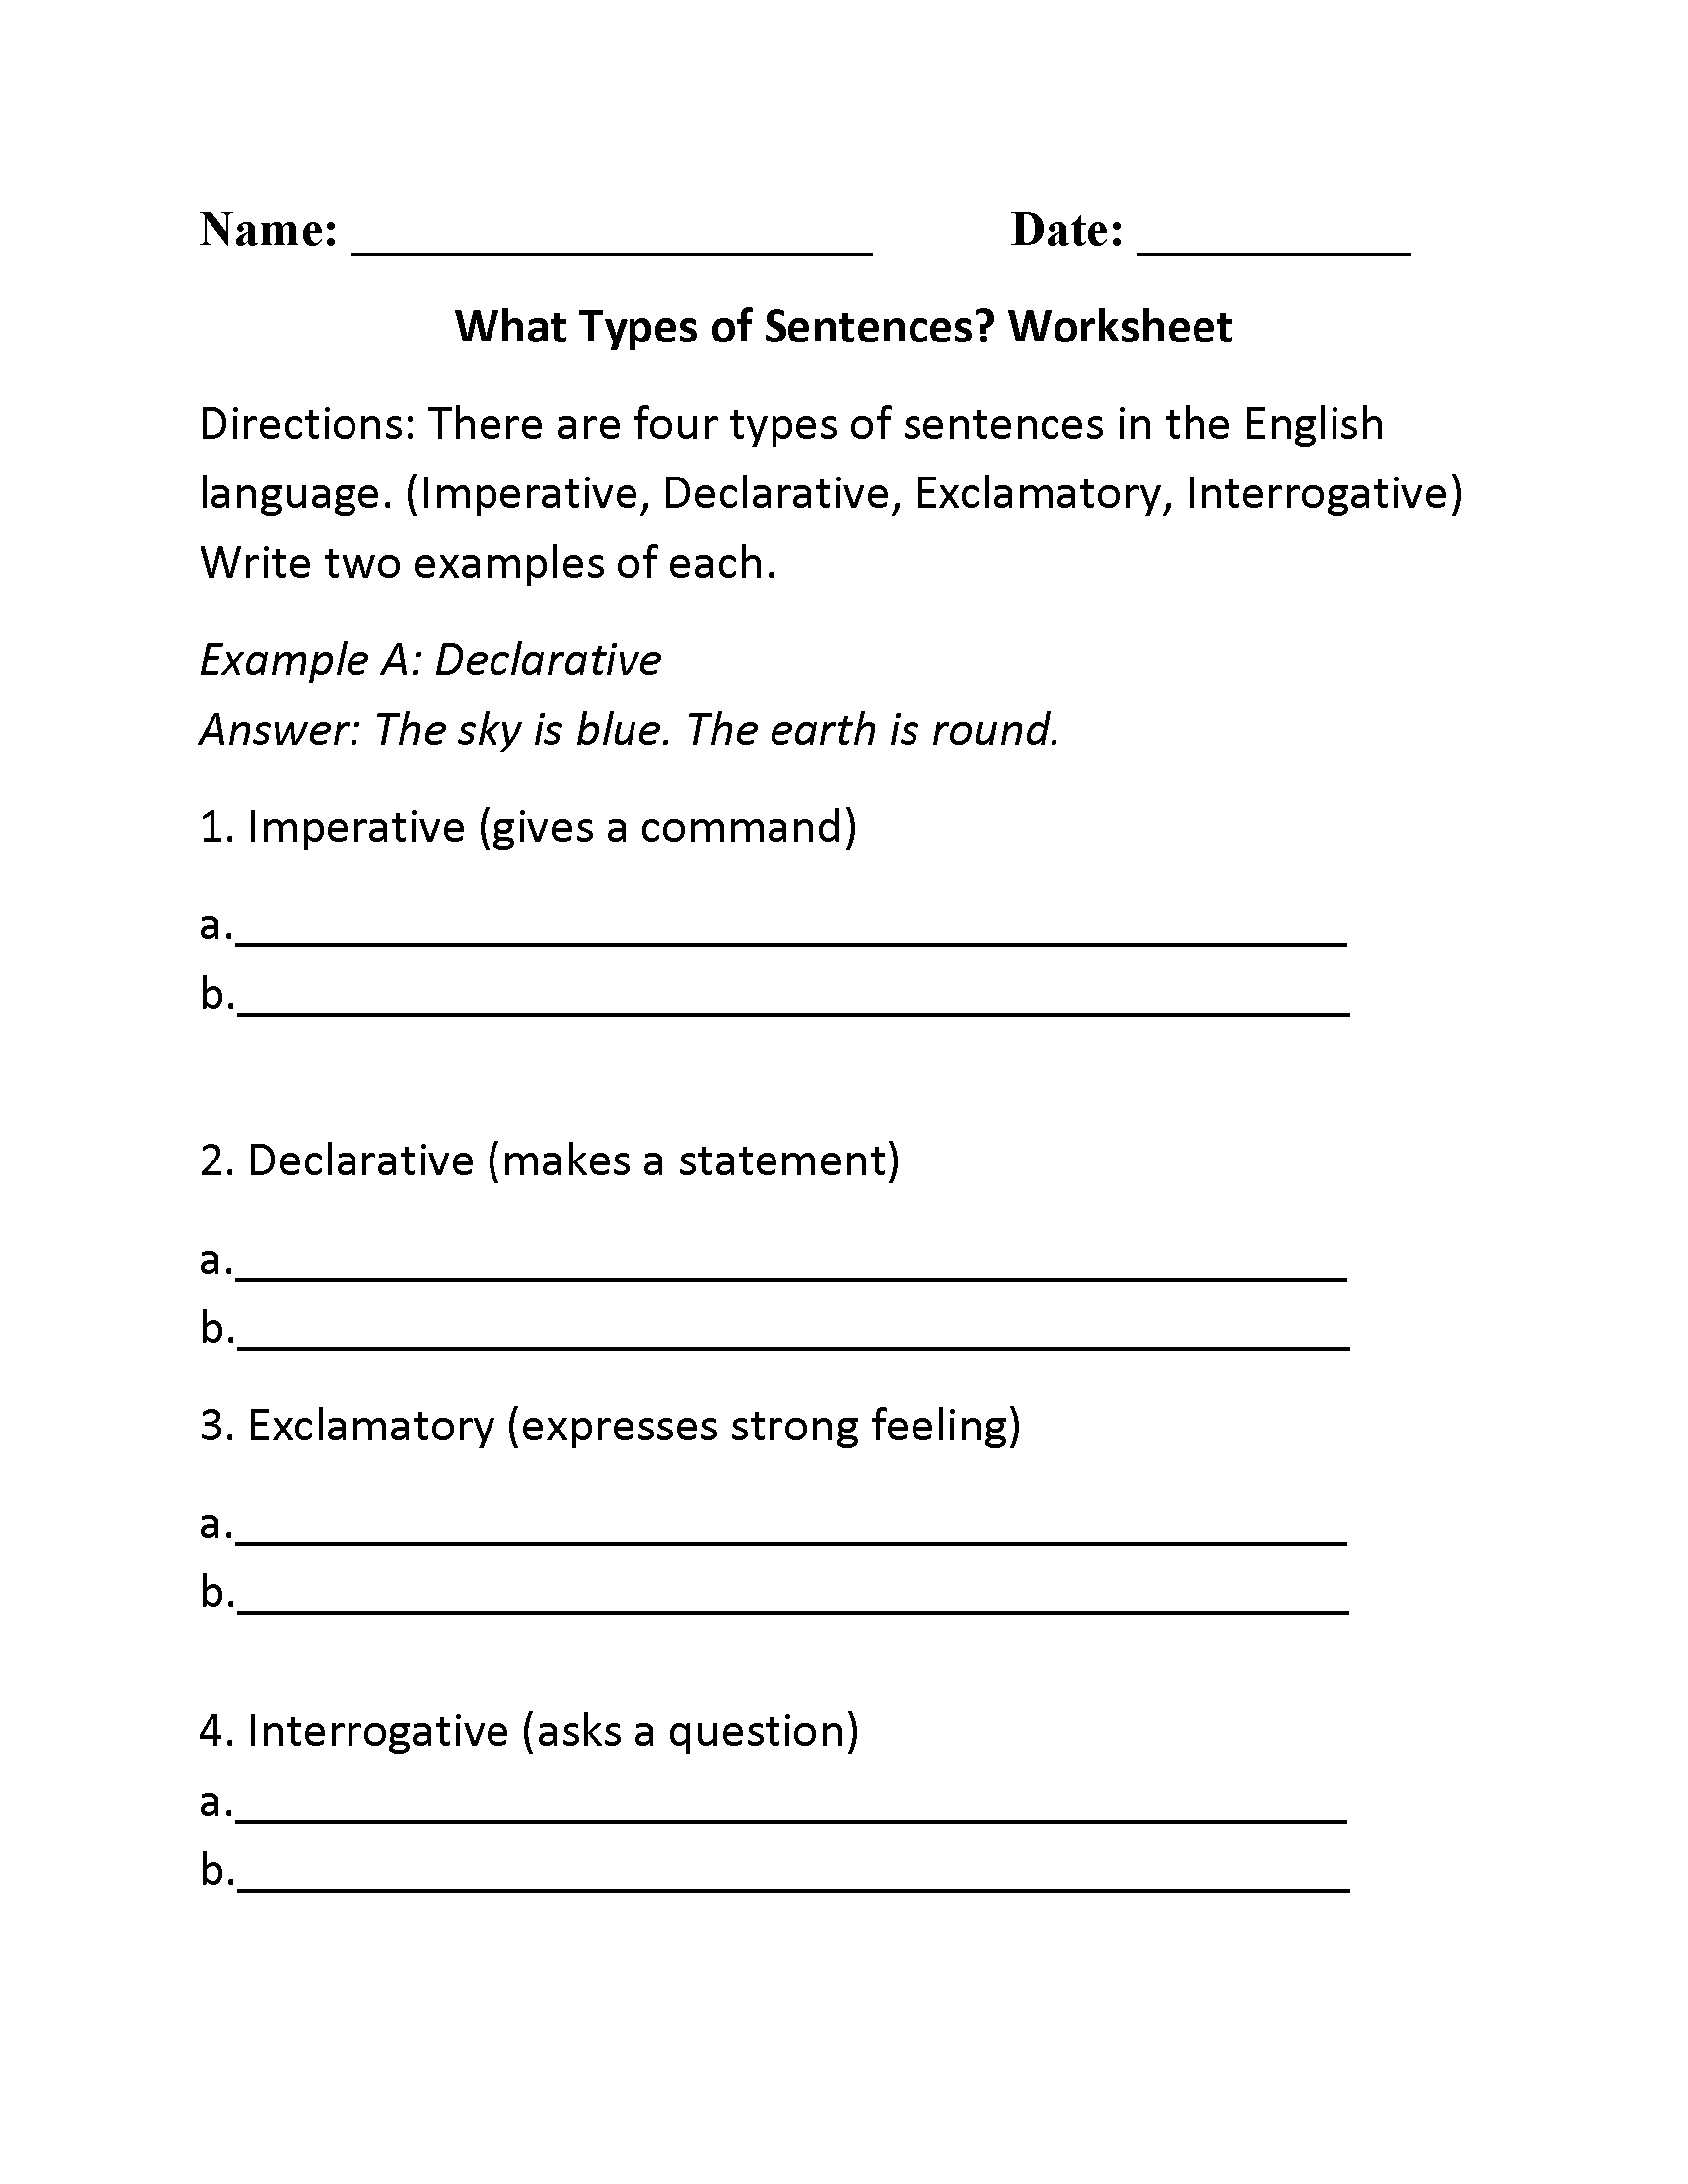 types-of-sentences-worksheets-what-types-of-sentences-worksheet